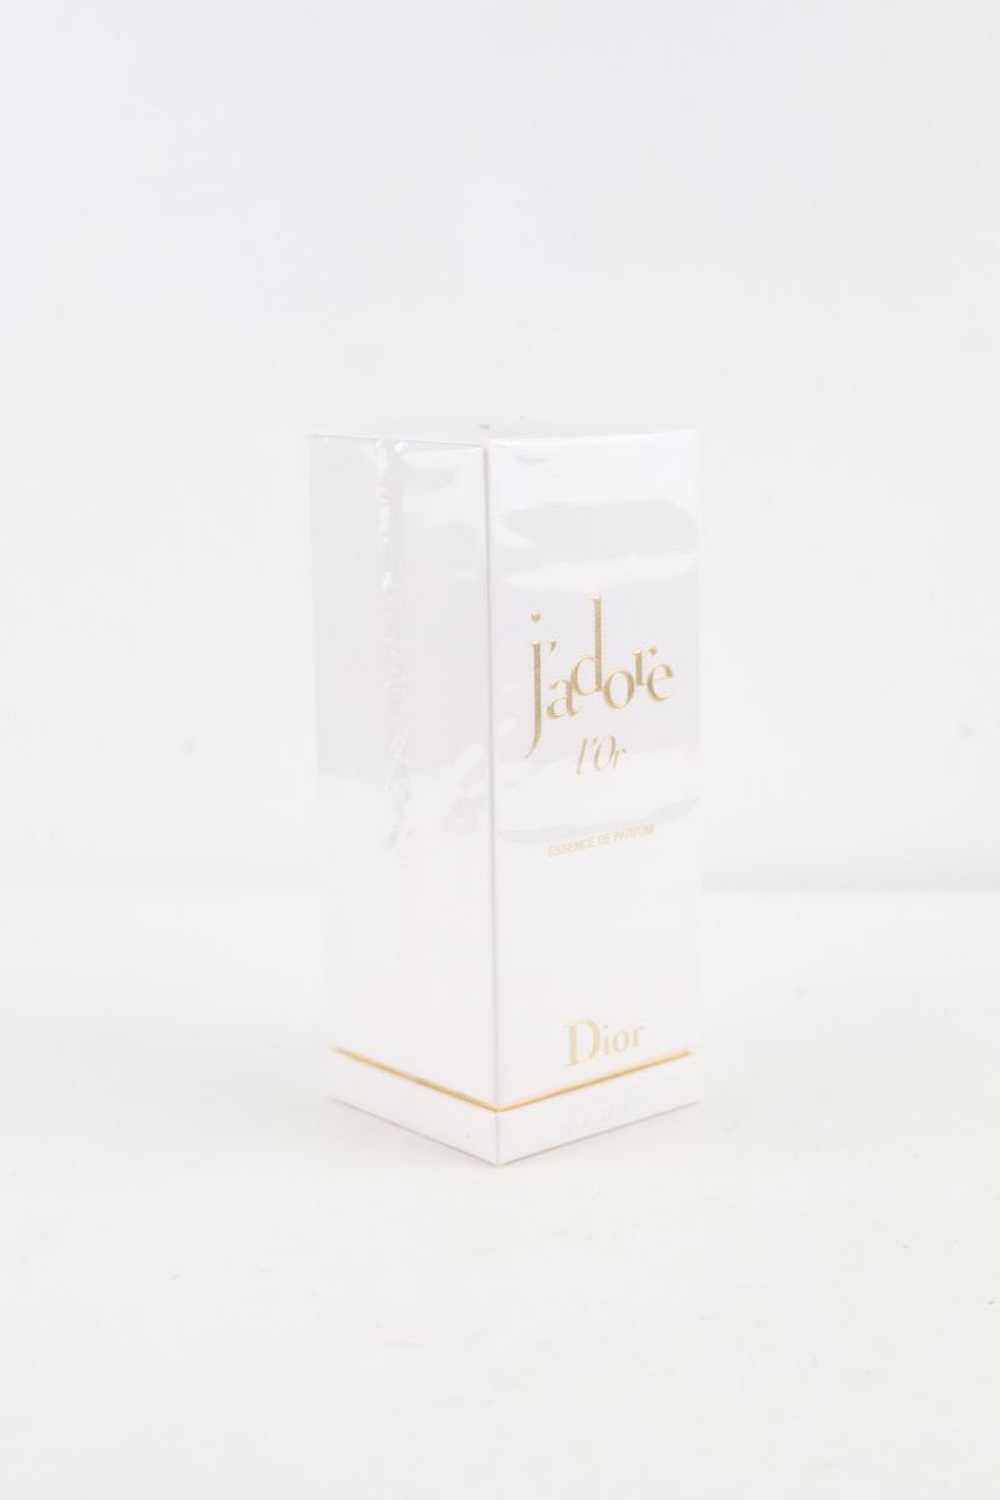 Circular Clothing Parfum Dior J'adore l'or. 50ml. - image 3